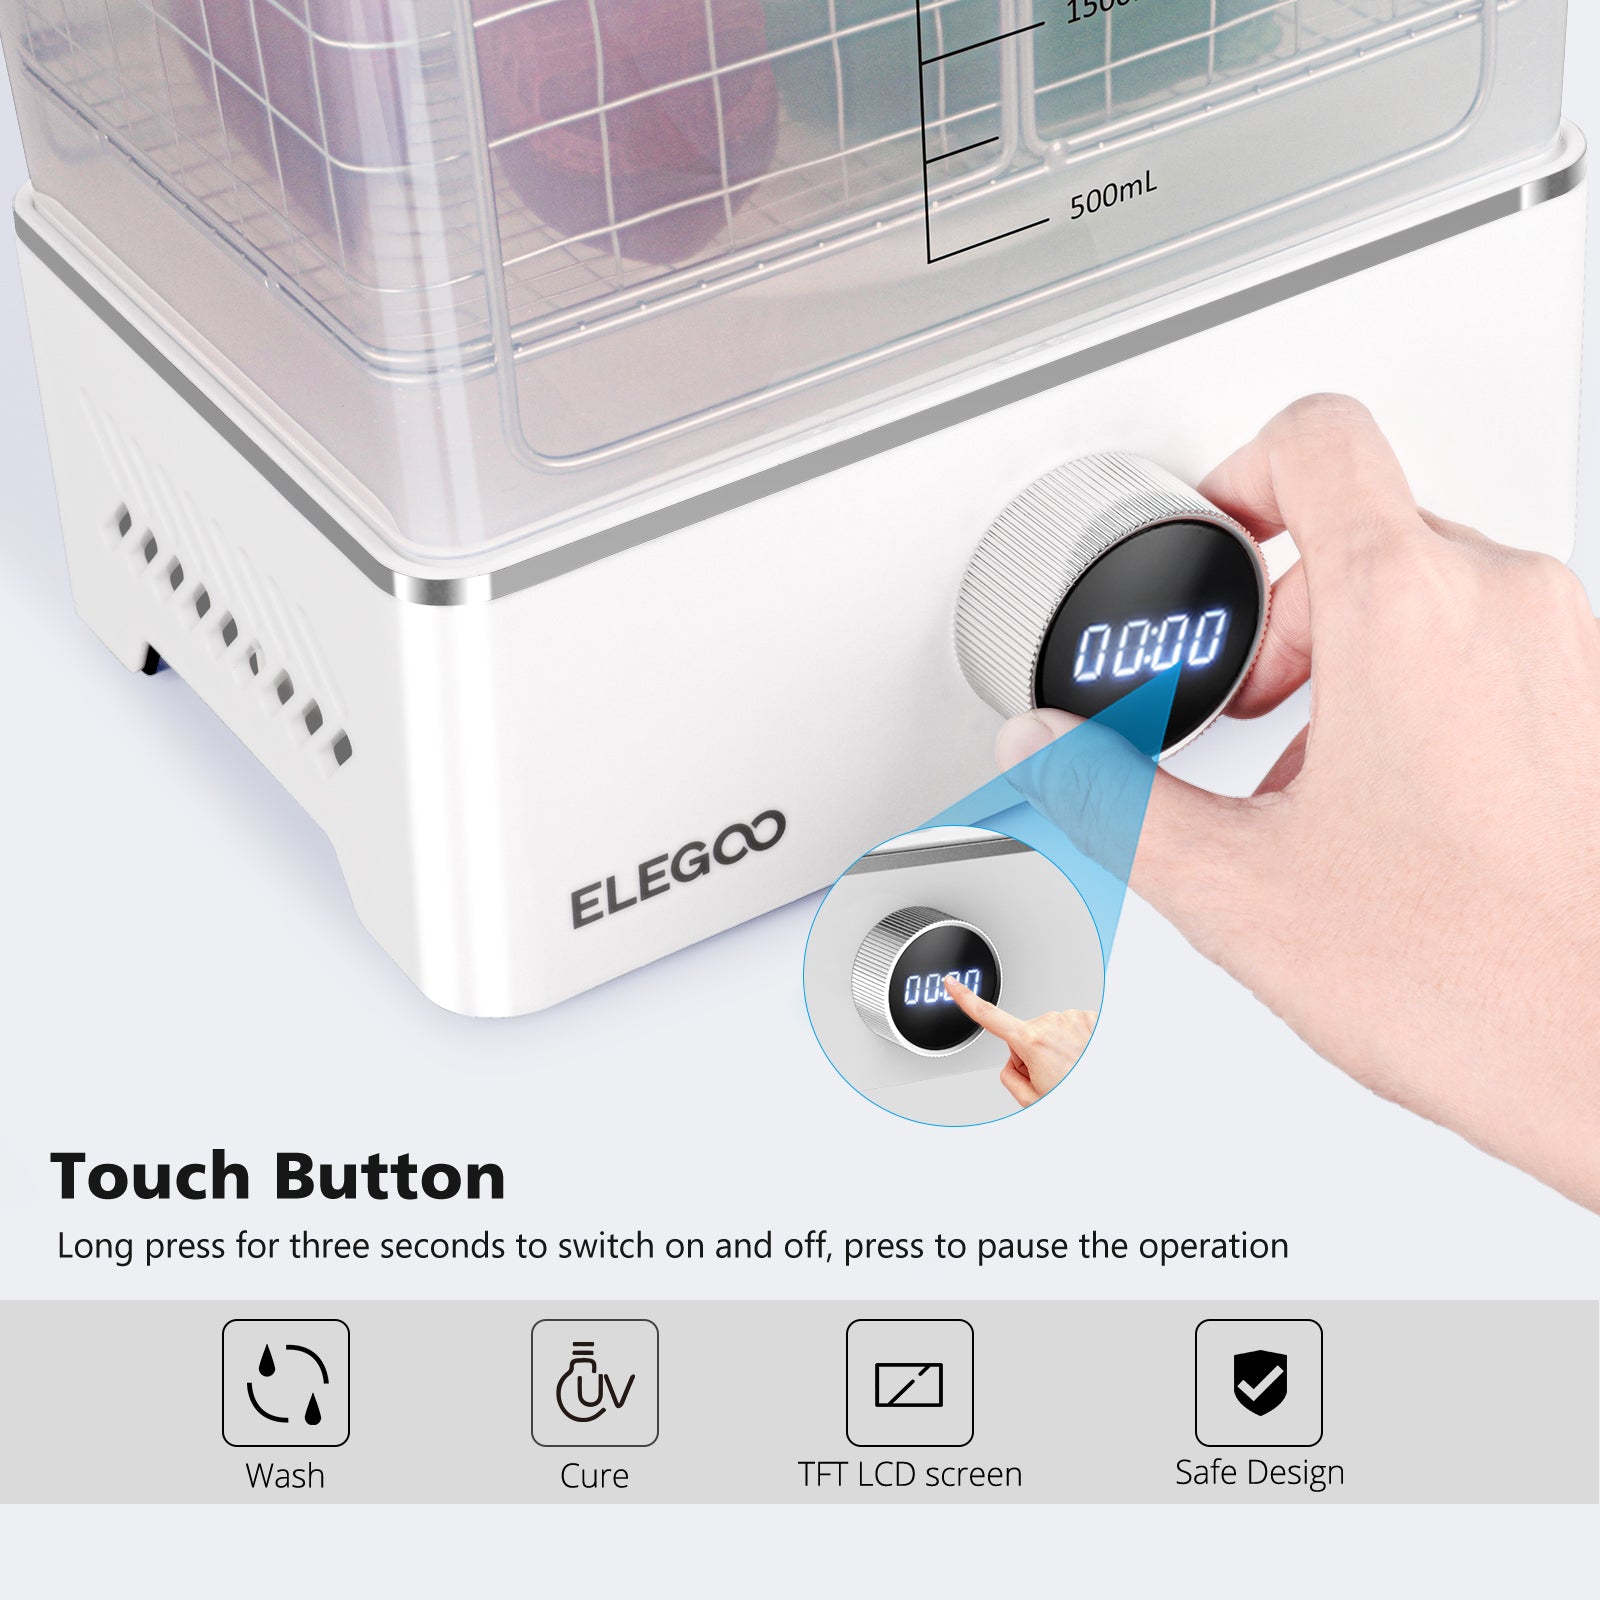 Elegoo 洗浄機・二次硬化機セット 『Mercury XS』 – 3Dプリンターとレジンフィラメントの通販・購入はSK本舗